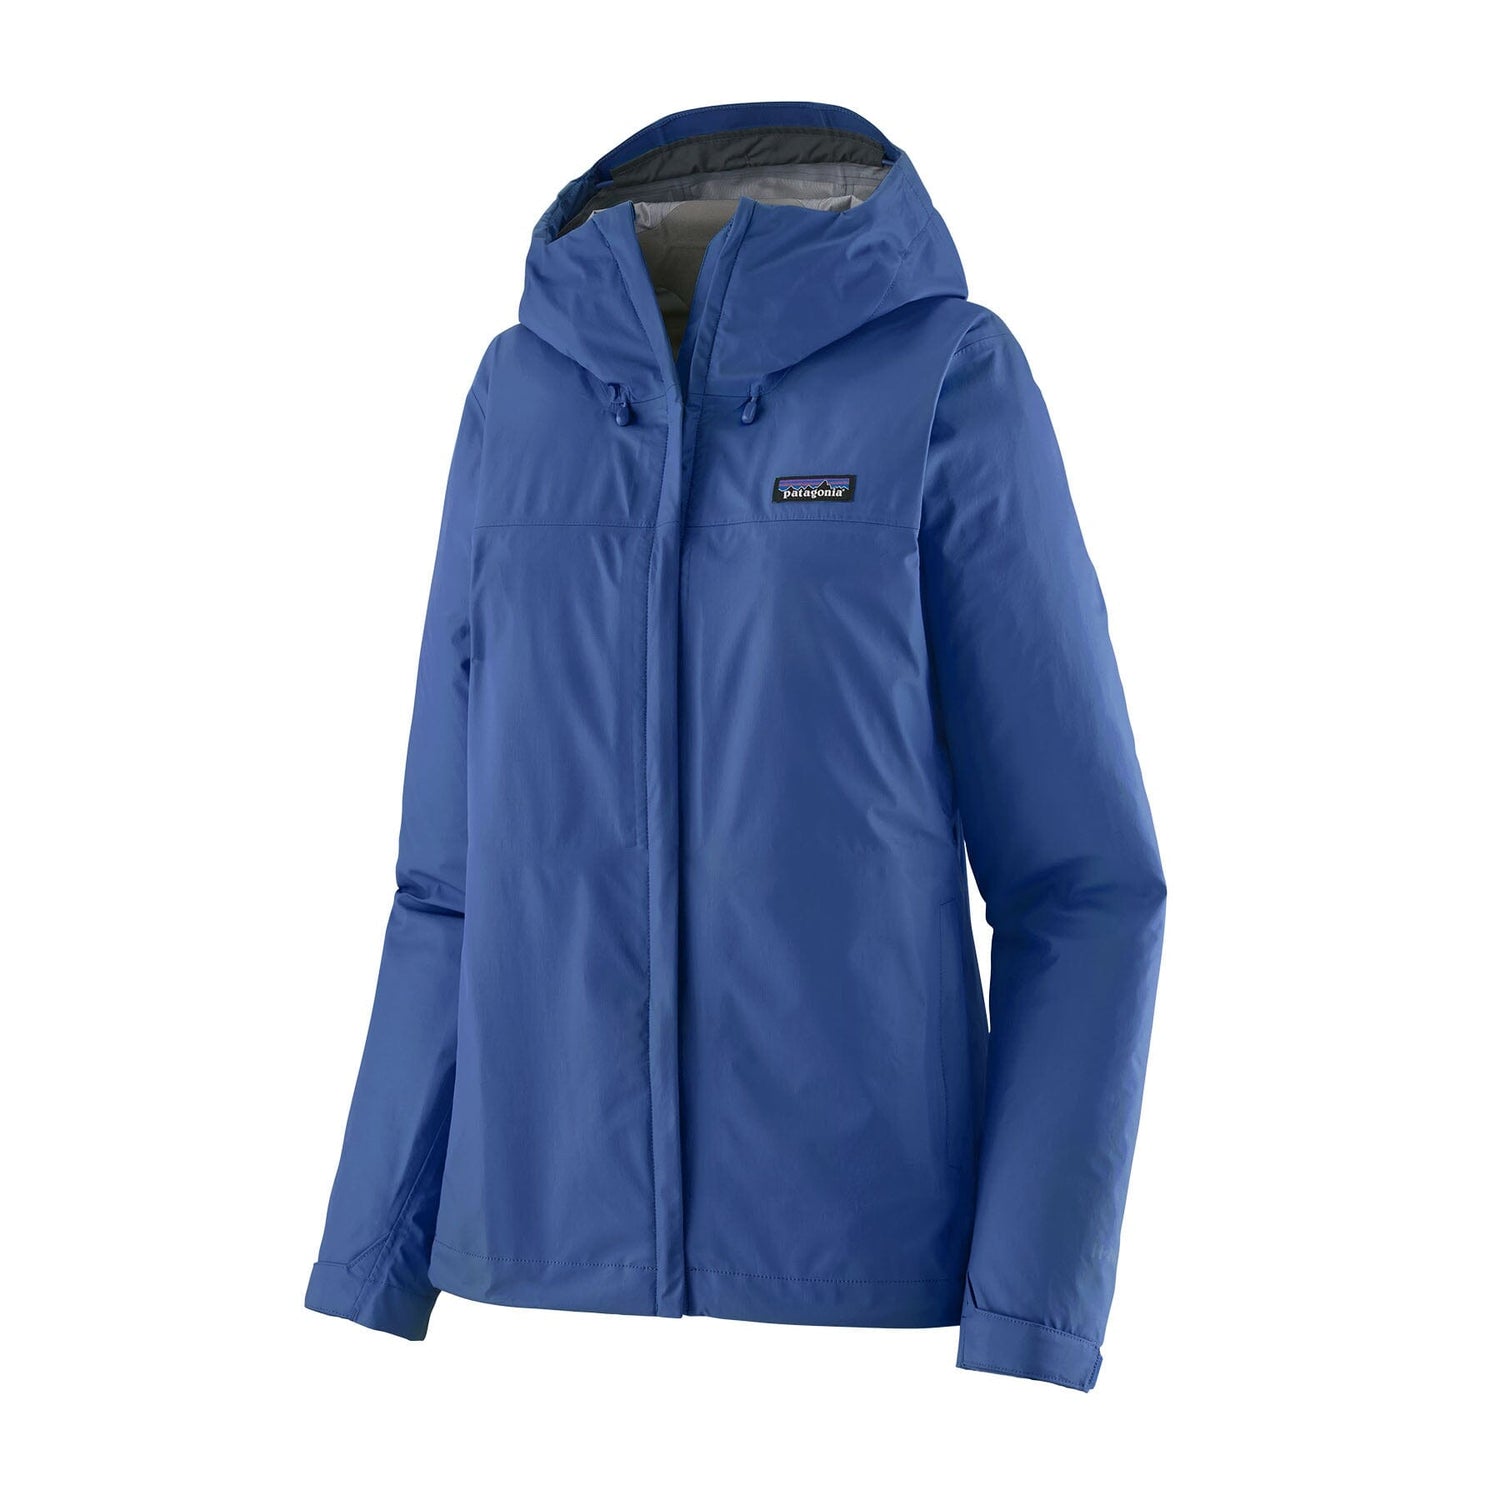 Patagonia W's Torrentshell 3L Jacket - 100% Recycled Nylon Float Blue XS Jacket